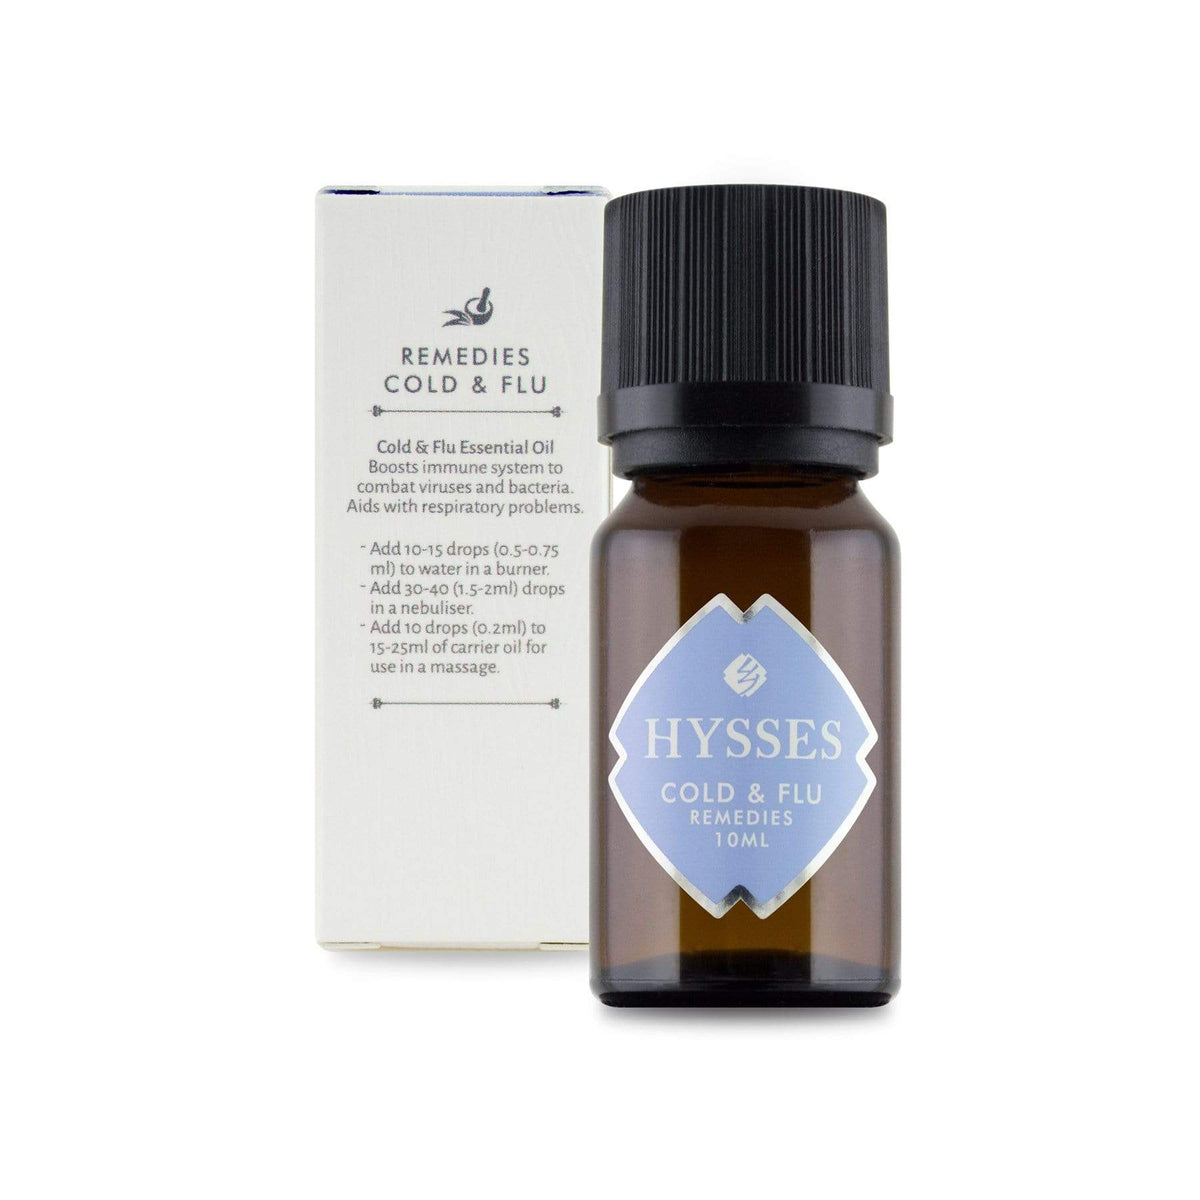 Hysses Essential Oil Remedies, Cold &amp; Flu